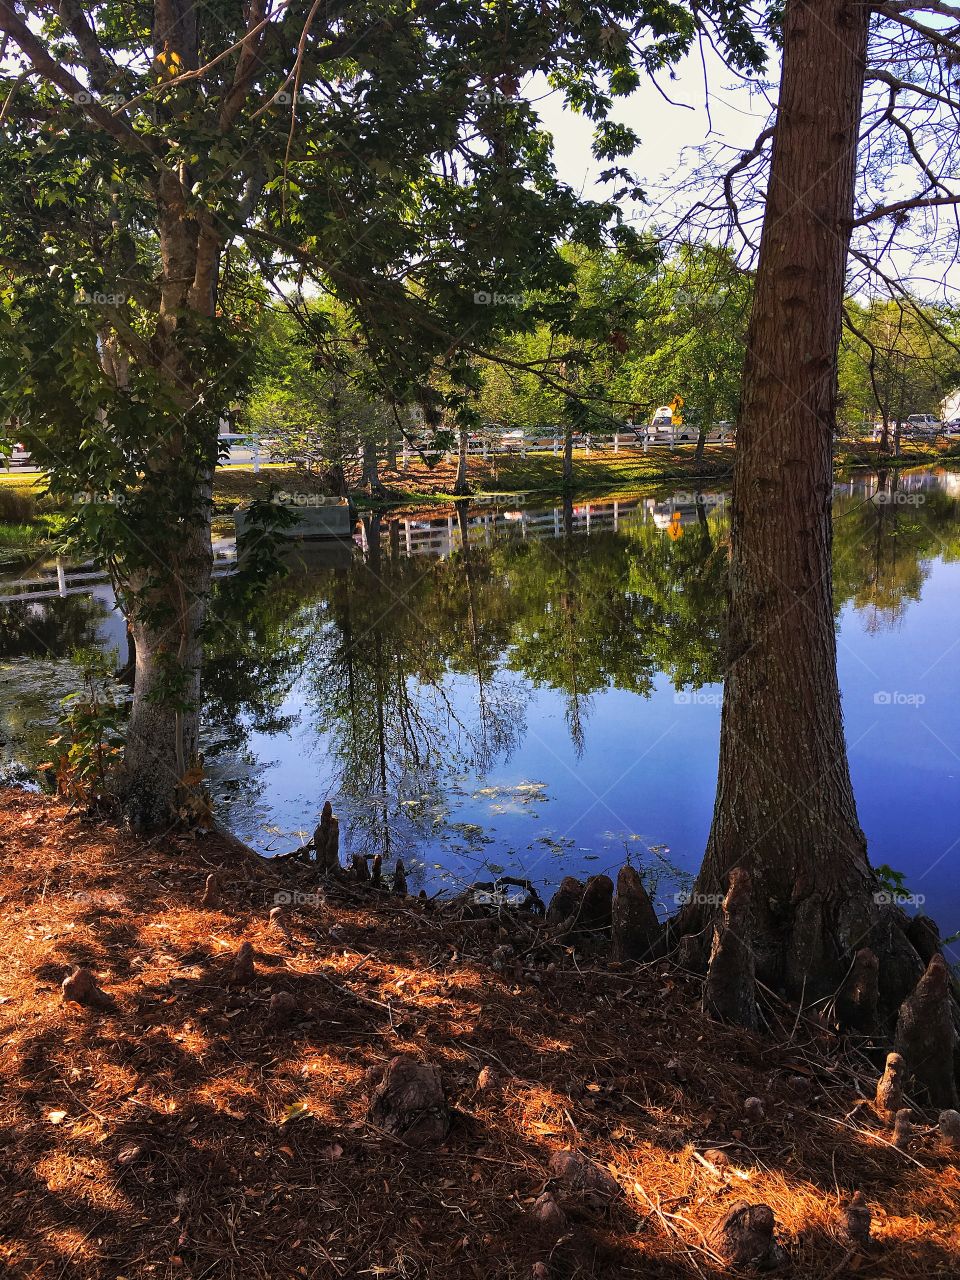 Reflection on a lake